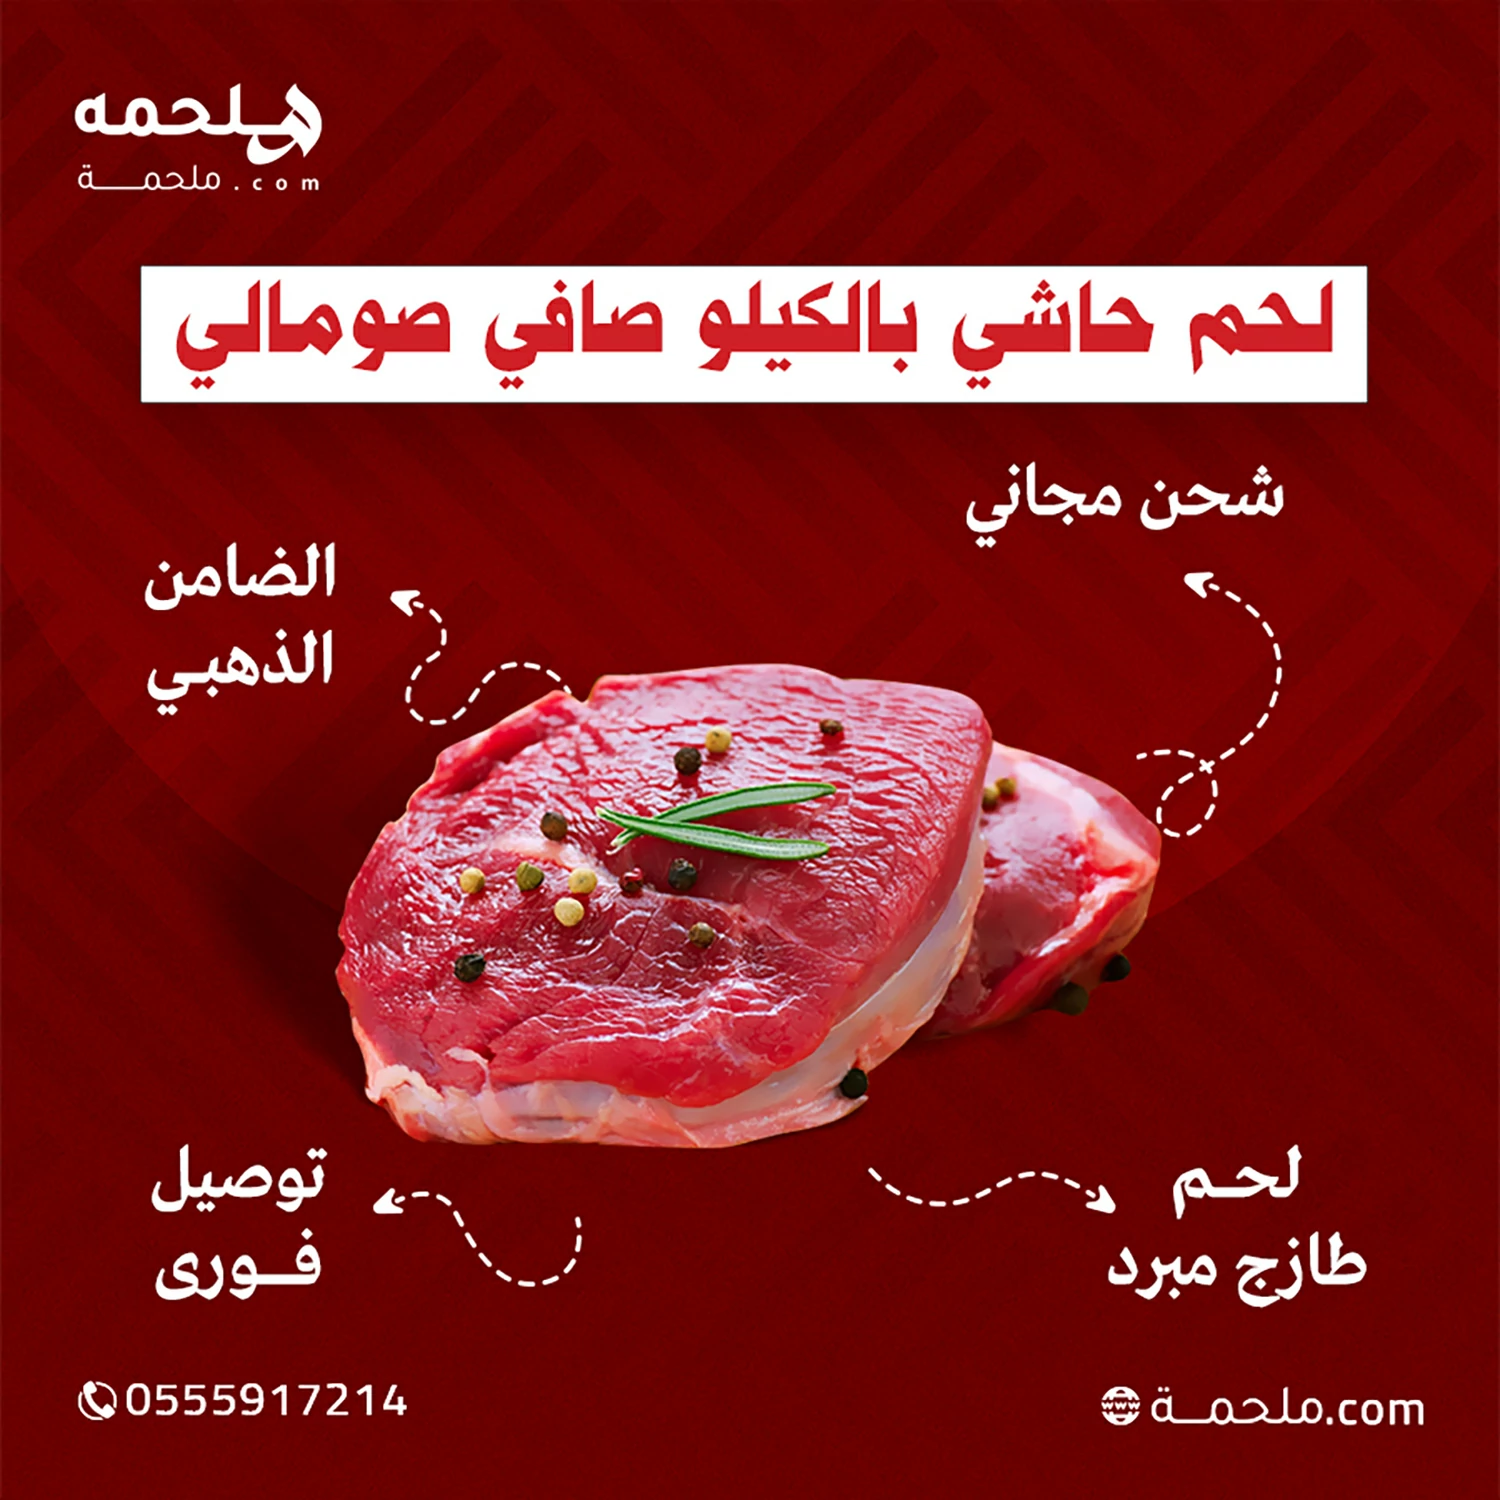 Hashi meat per kilo